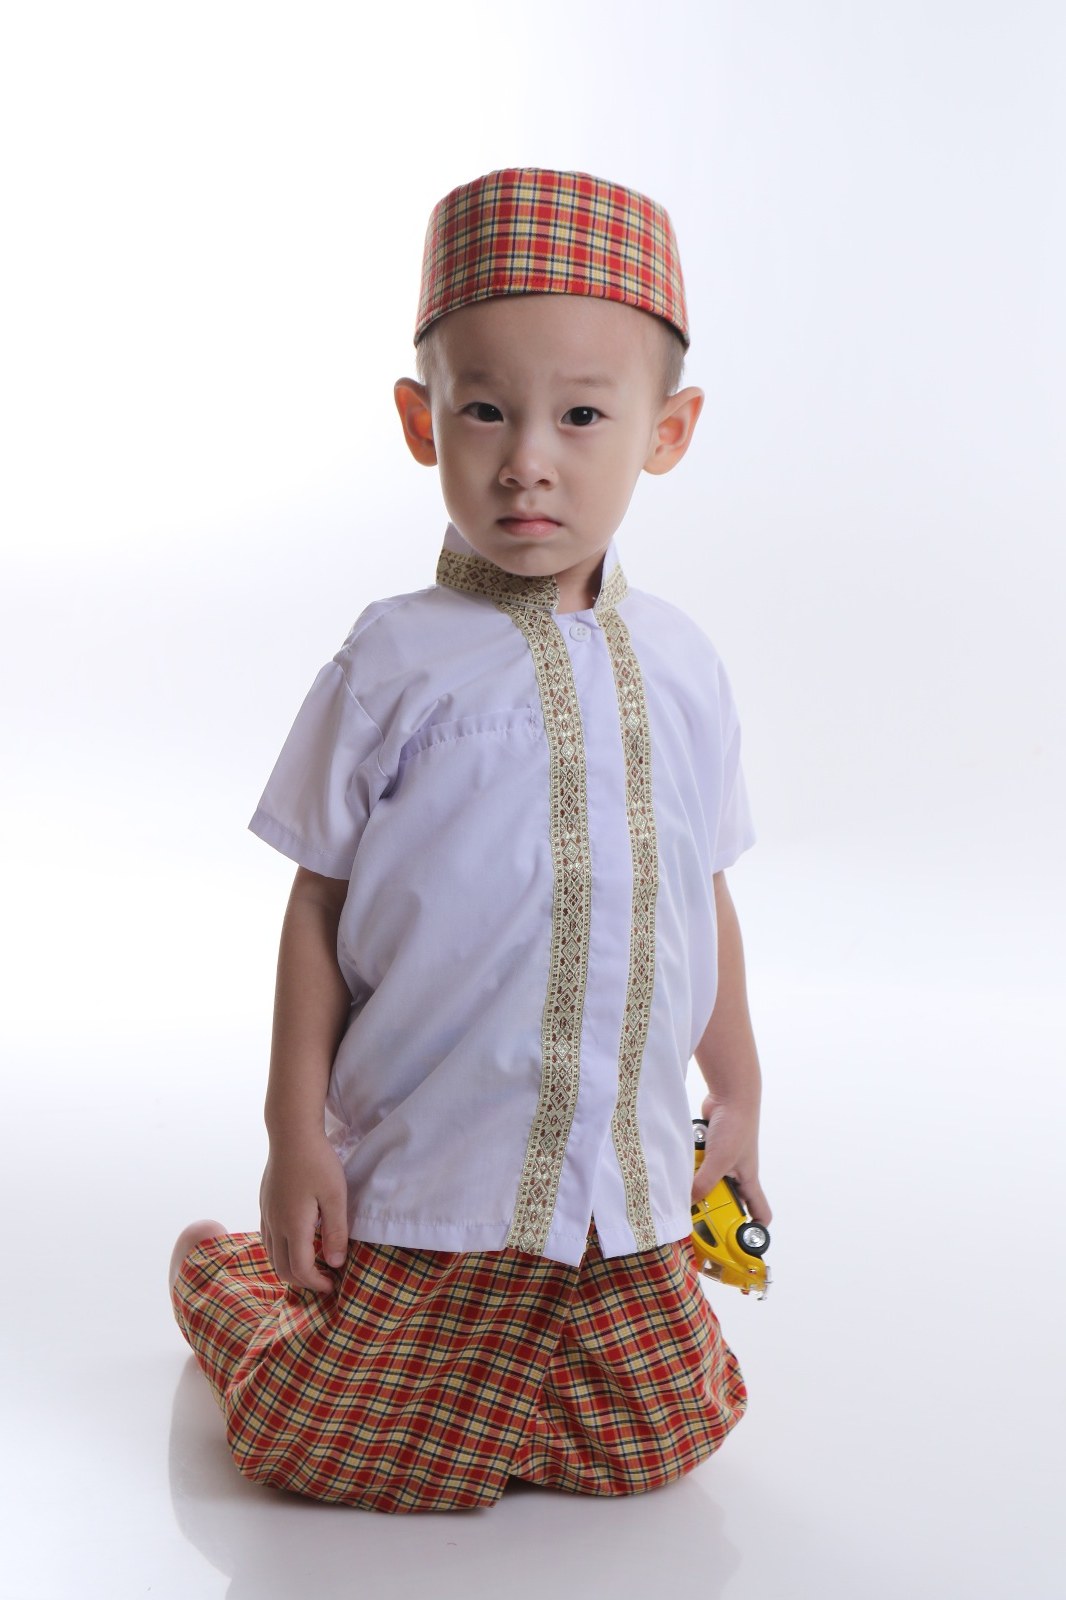 Bentuk Baju Lebaran Anak Laki Laki 2018 Dddy Model Baju Muslim Untuk Anak Laki Laki Desain Terbaru